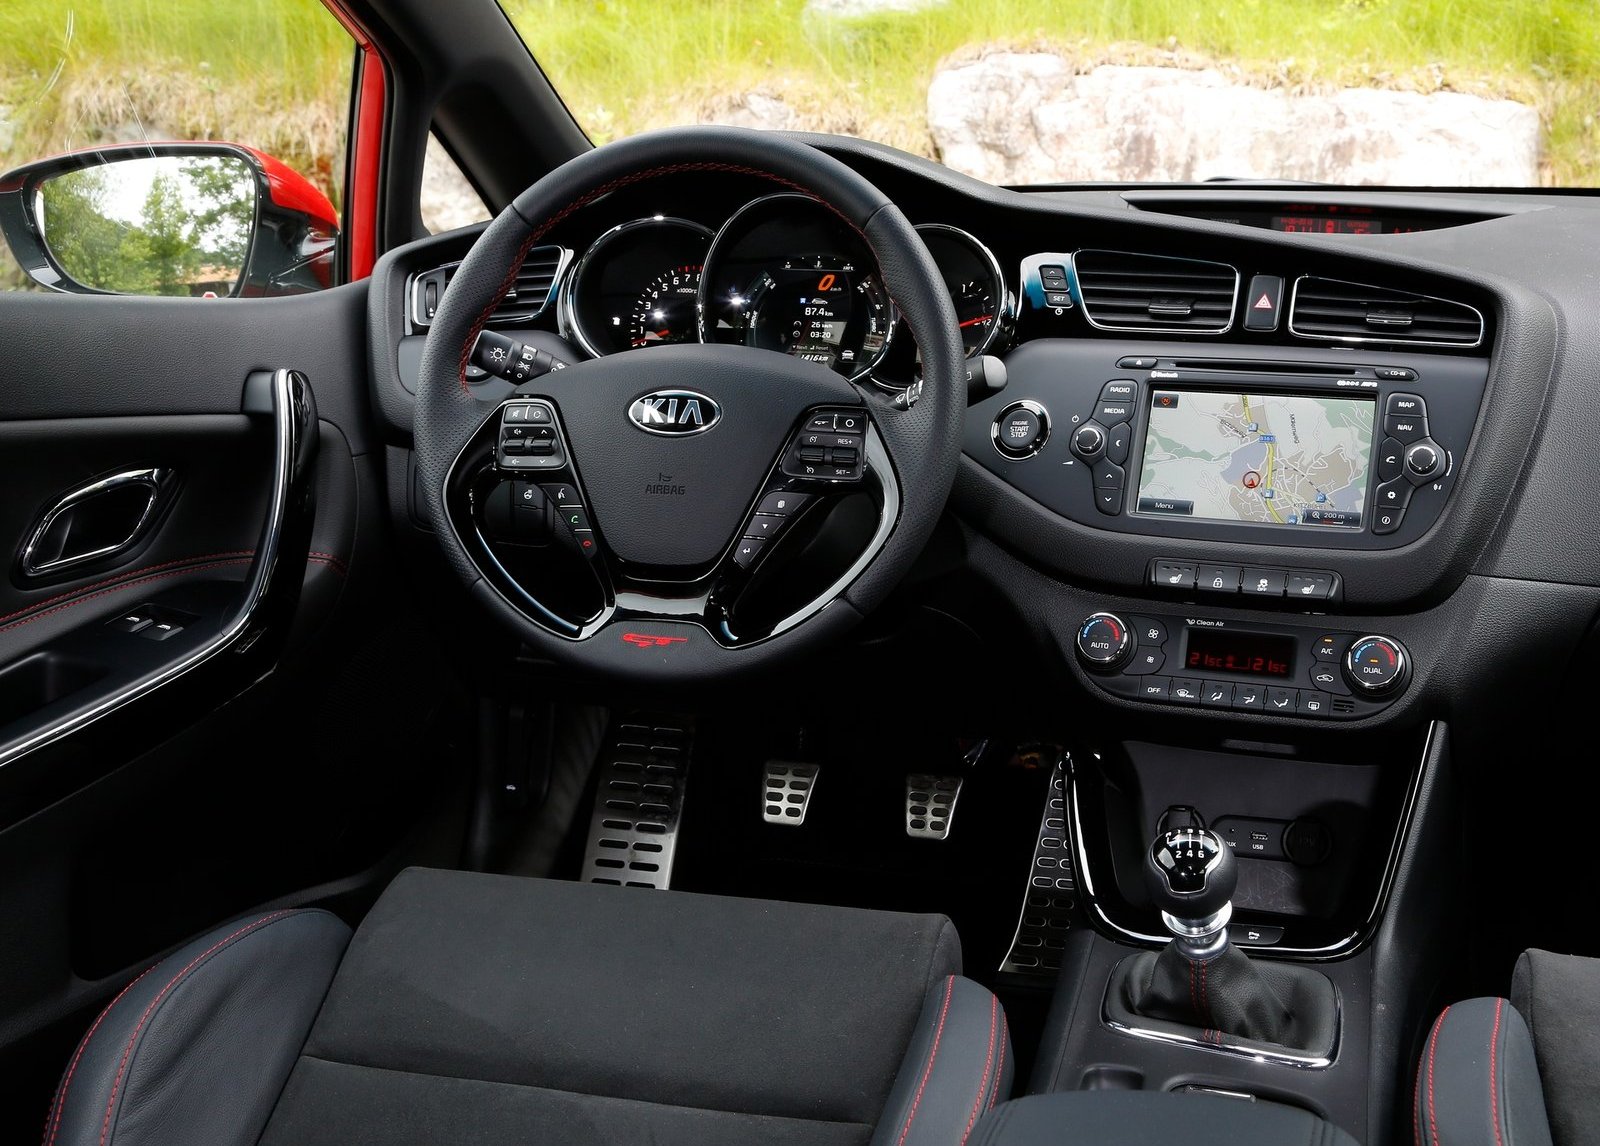 2014 Kia Ceed GT Dashboard Interior View